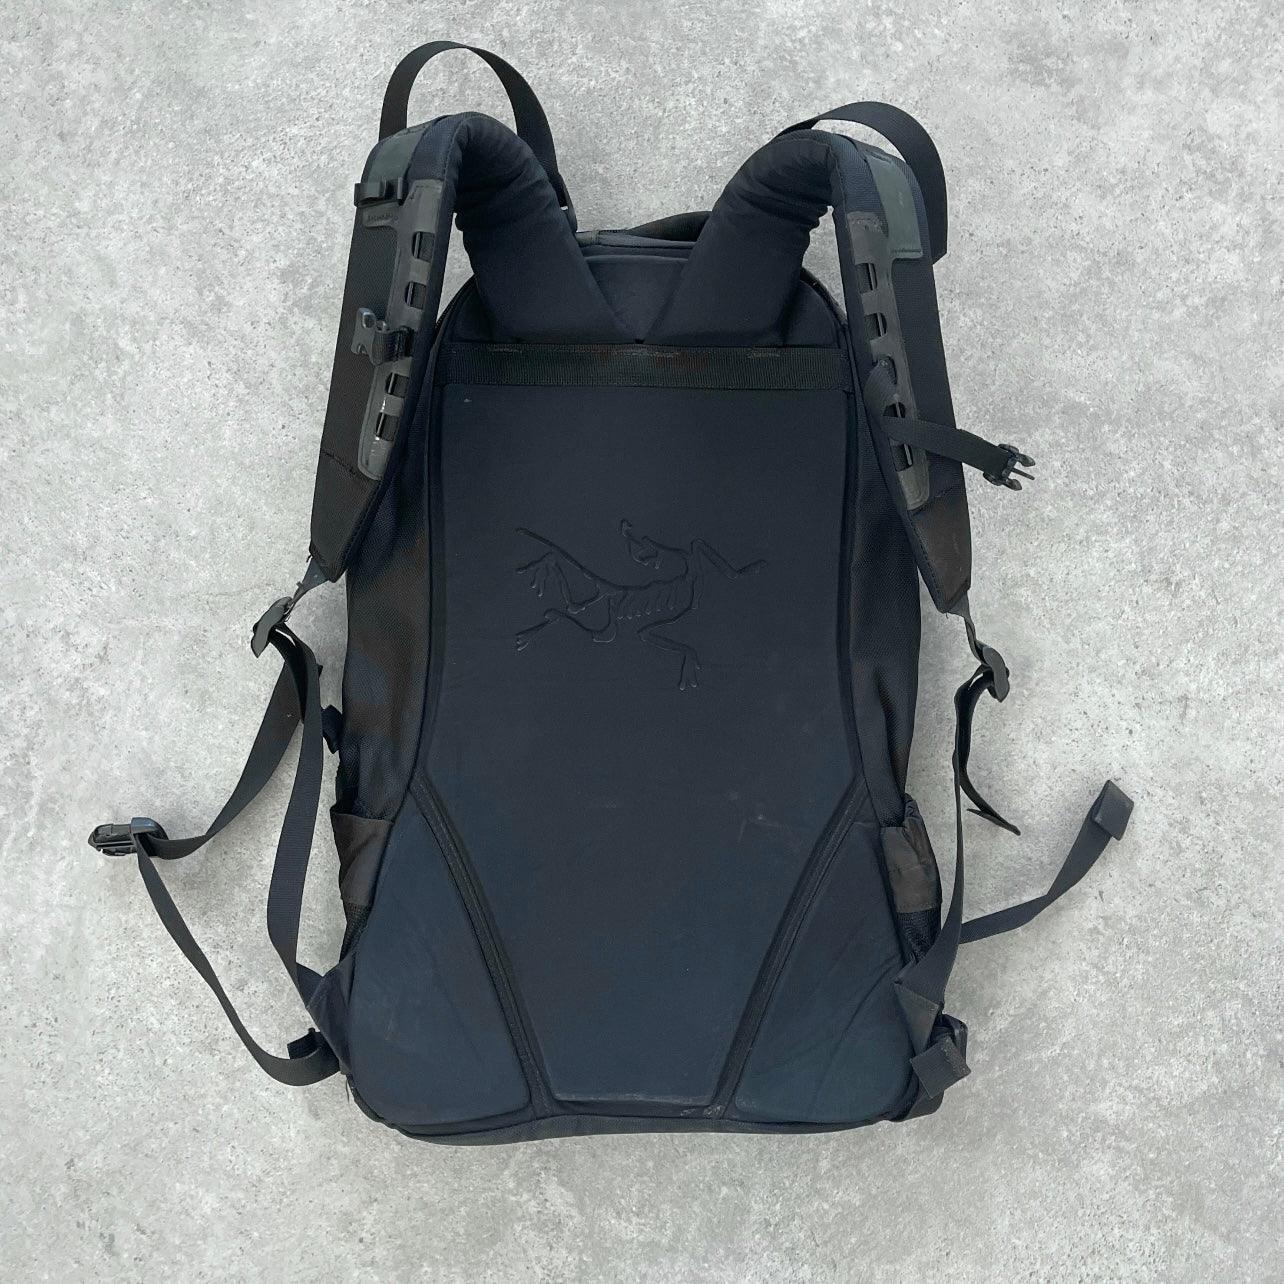 Arc’teryx Arro 22 backpack (20”x12”x8”) - Known Source